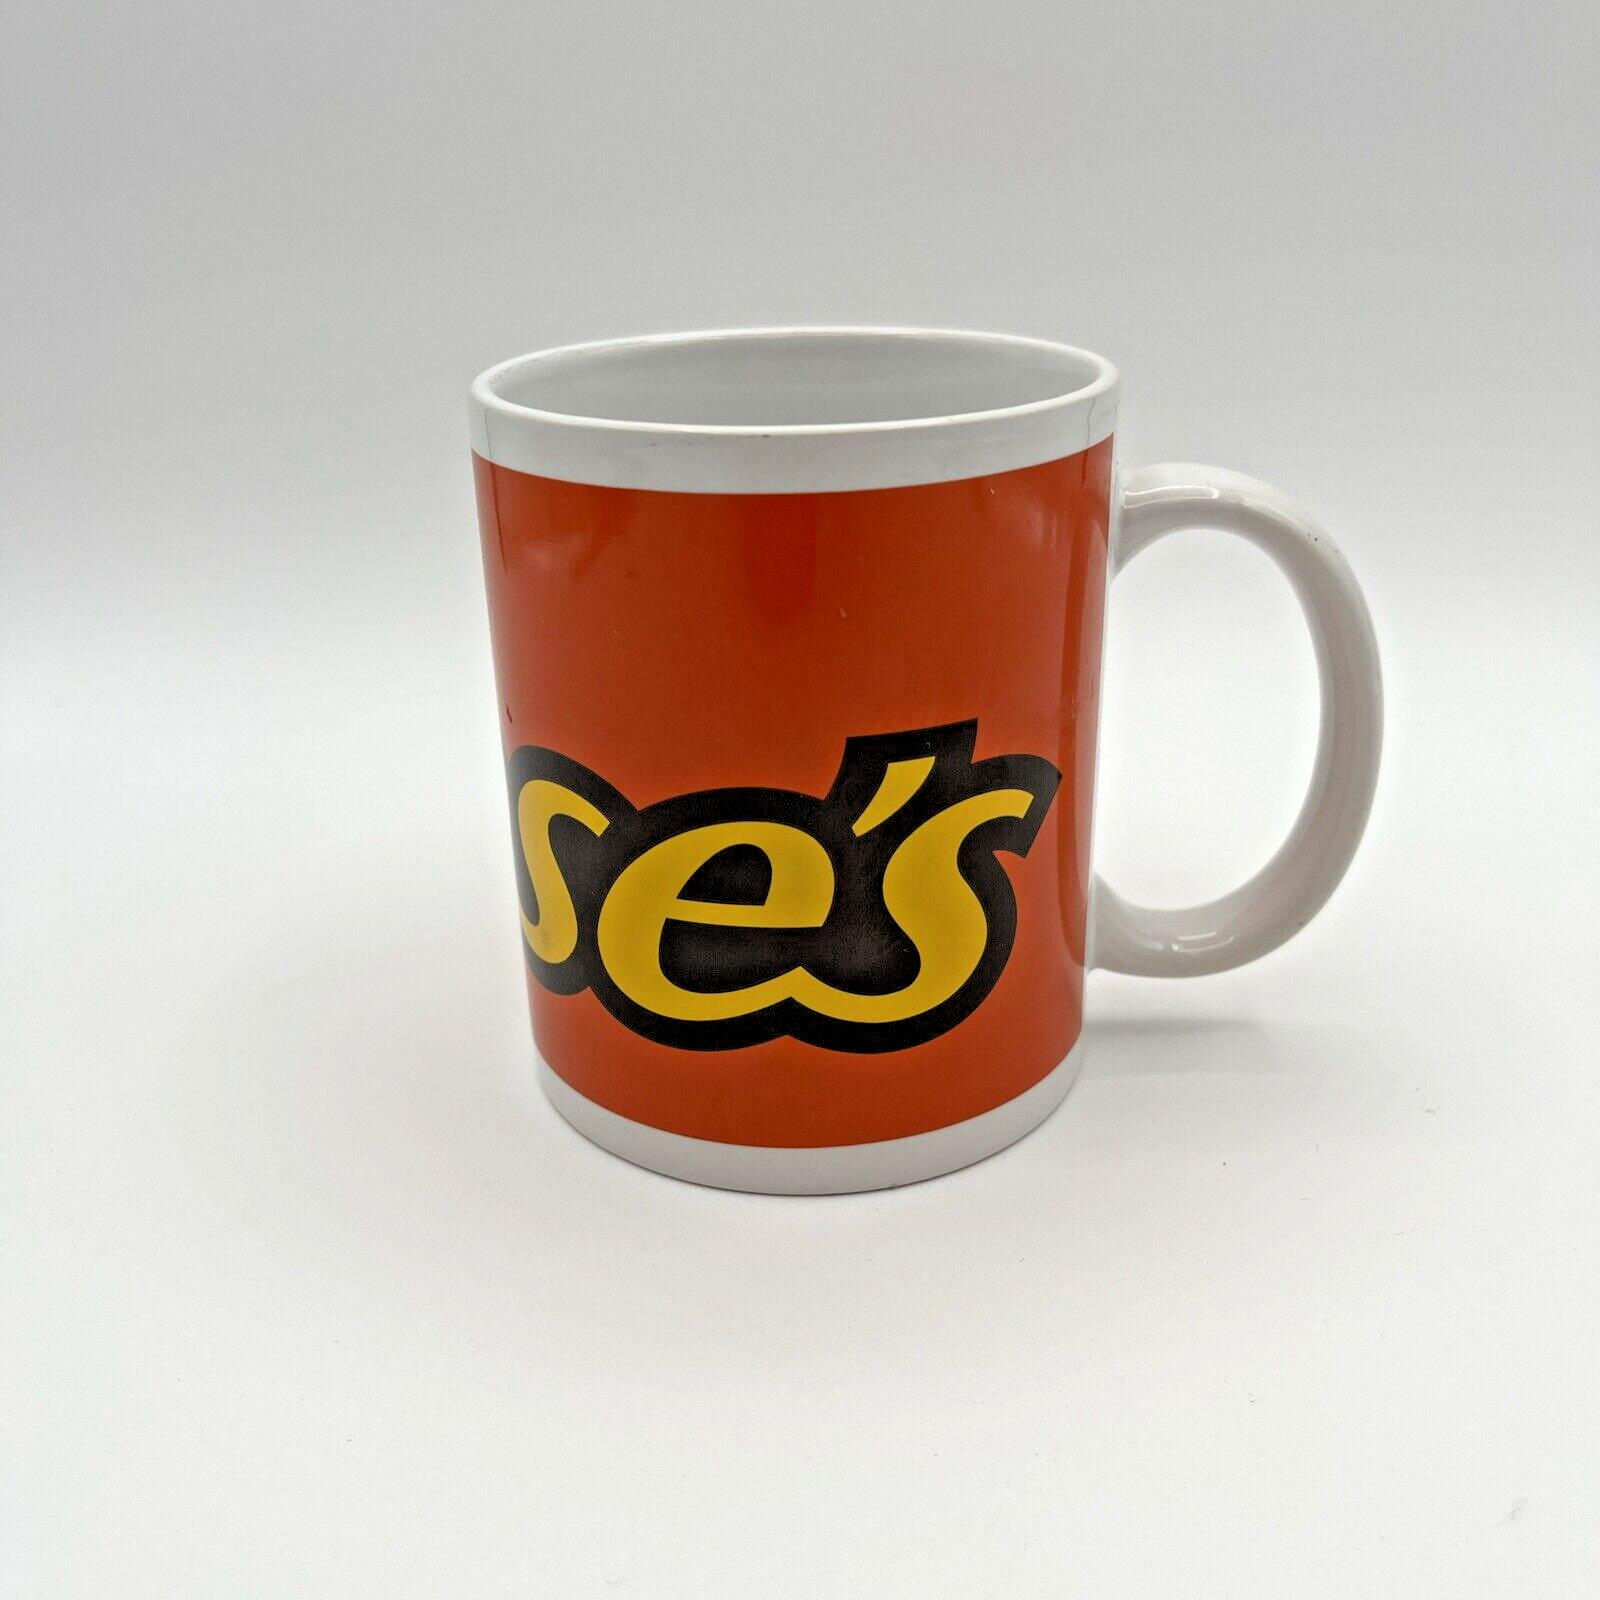 Reese\'s Peanut Butter Cup Coffee Mug - Hershey\'s Chocolate Candy Vinatge